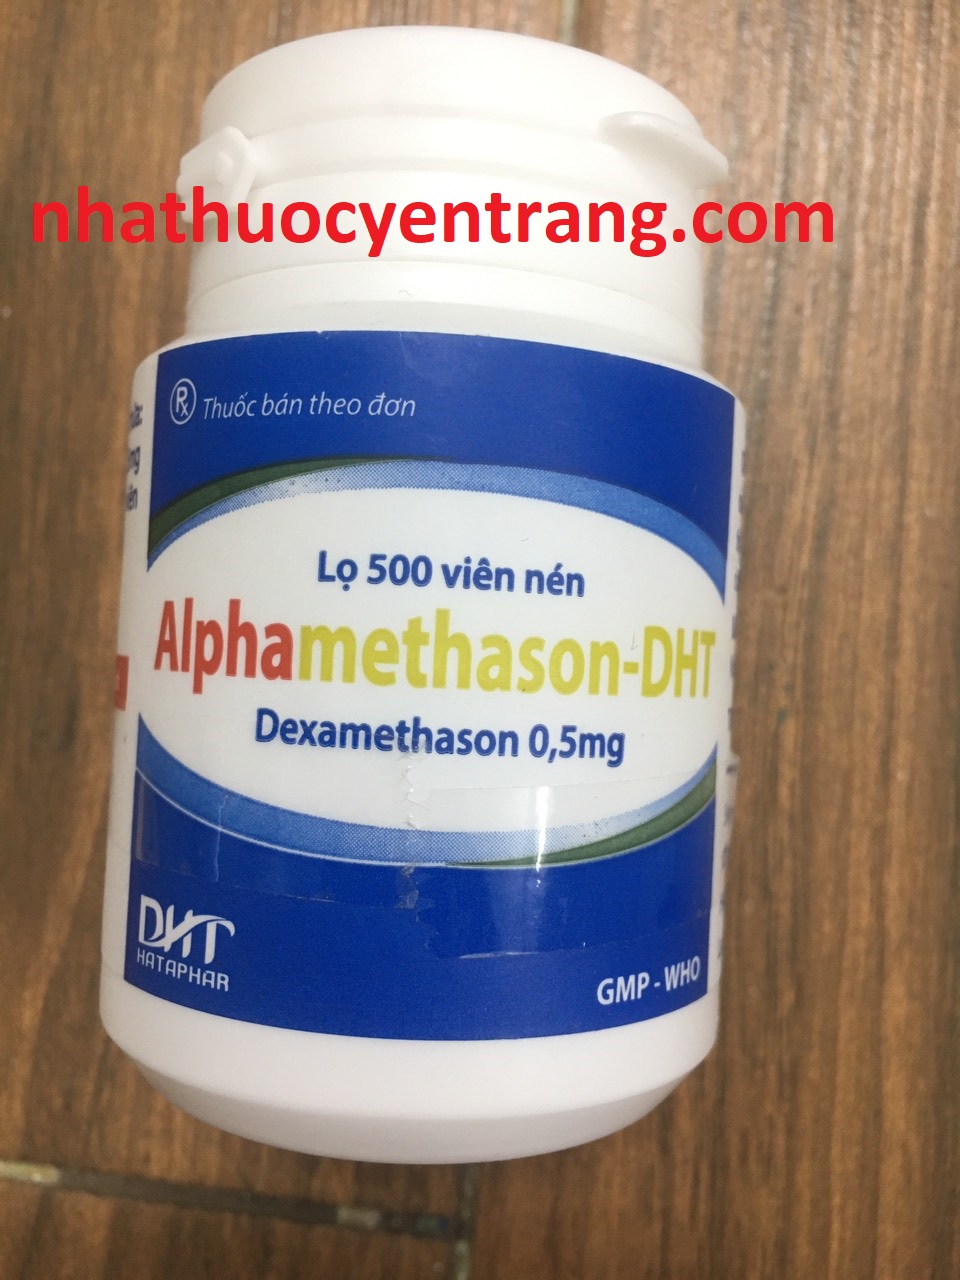 Alphamethason-DHT 0.5mg